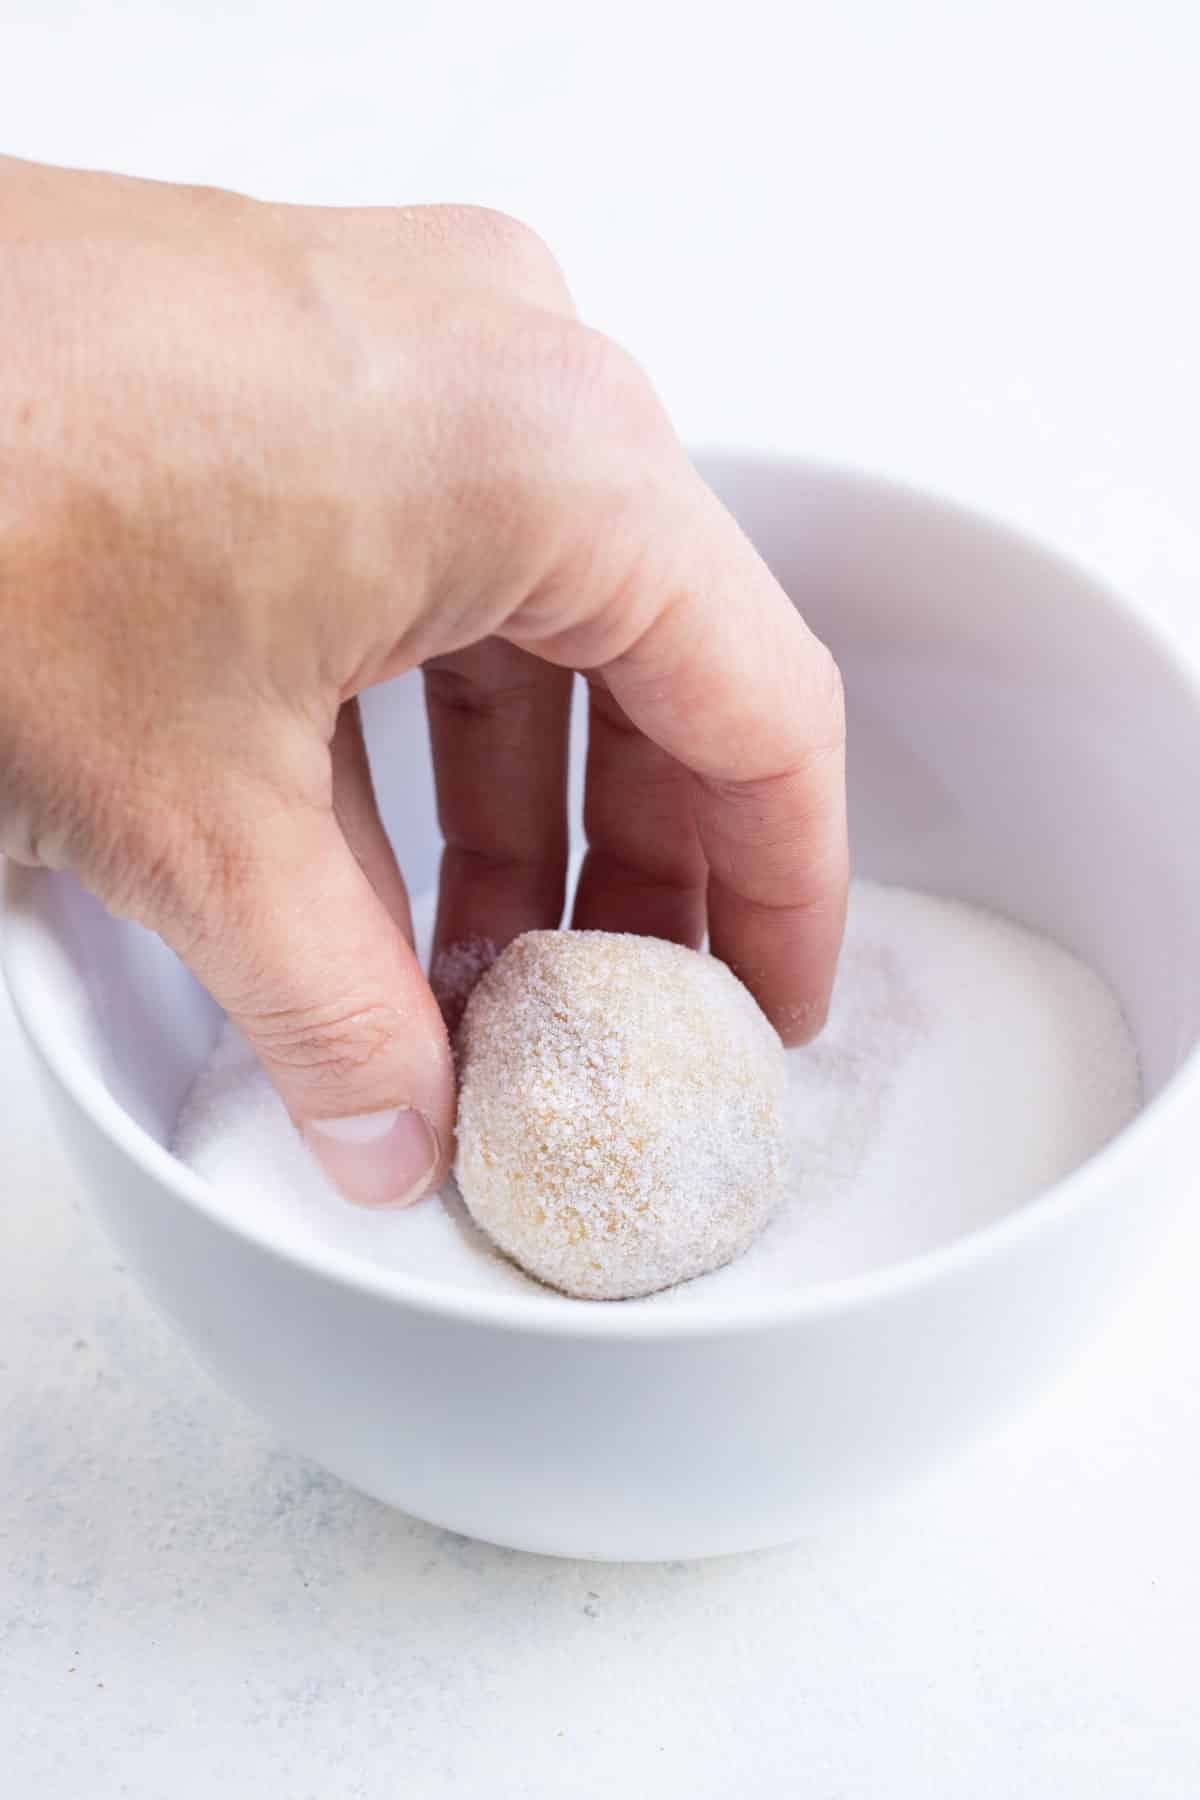 A hand rolls a peanut butter cookie dough ball in a bowl of sugar.